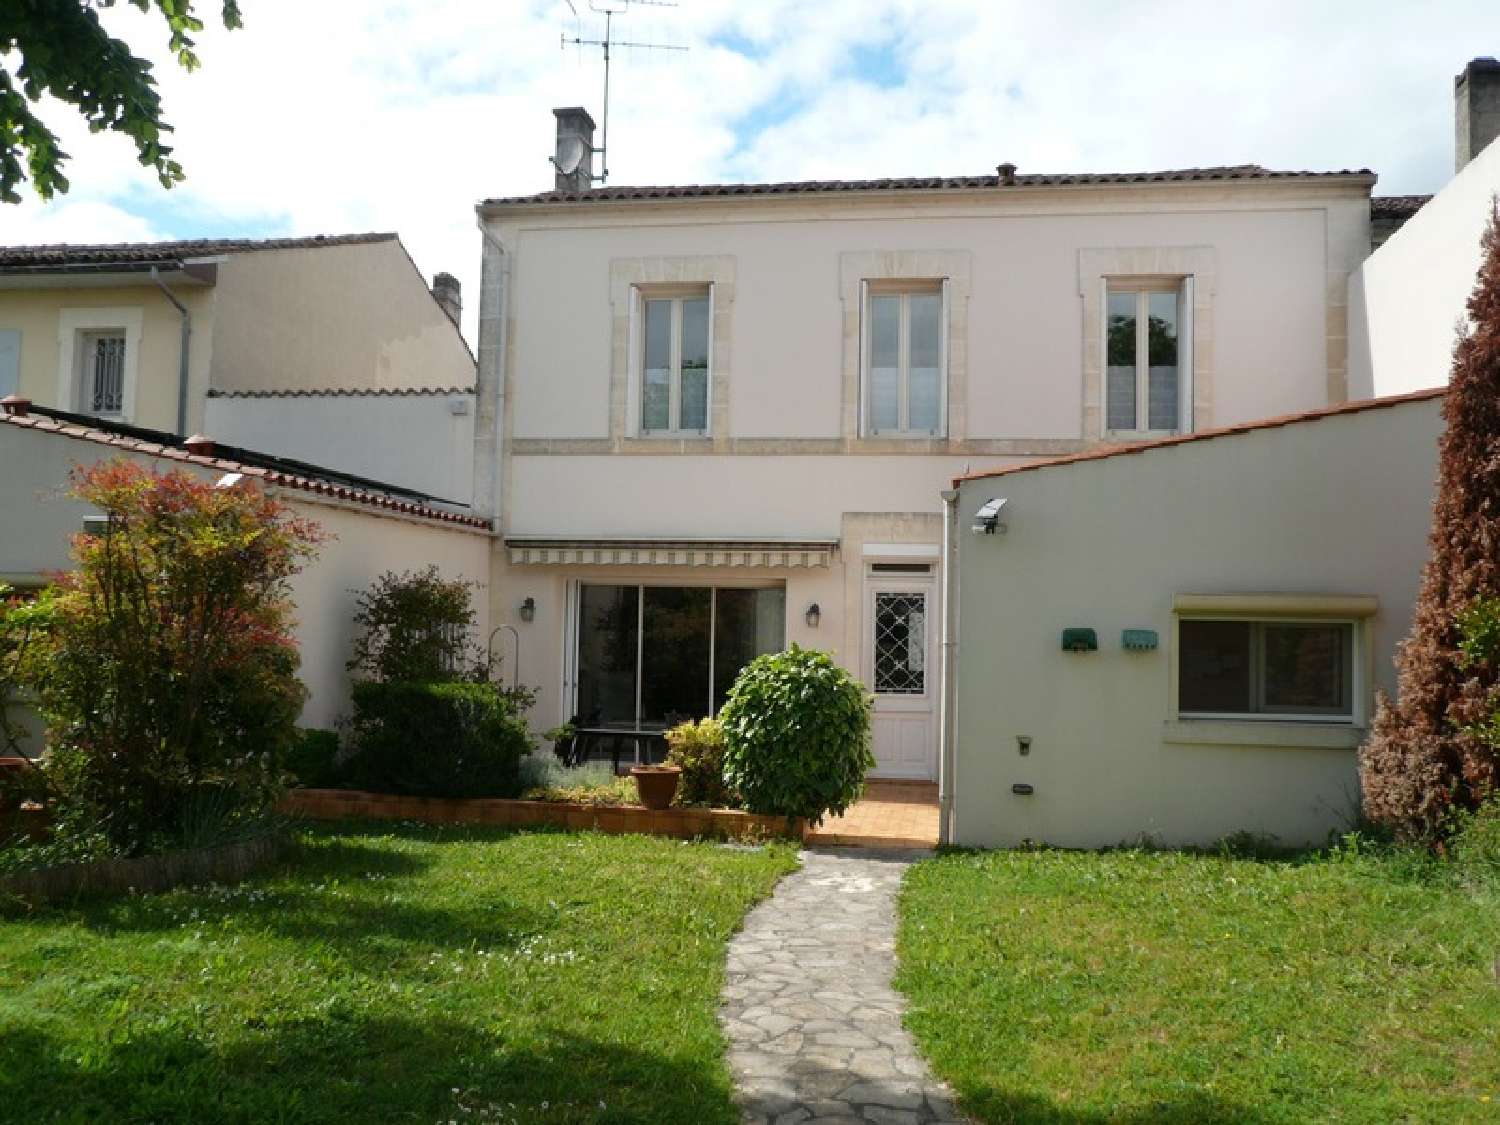  for sale house Cognac Charente 2